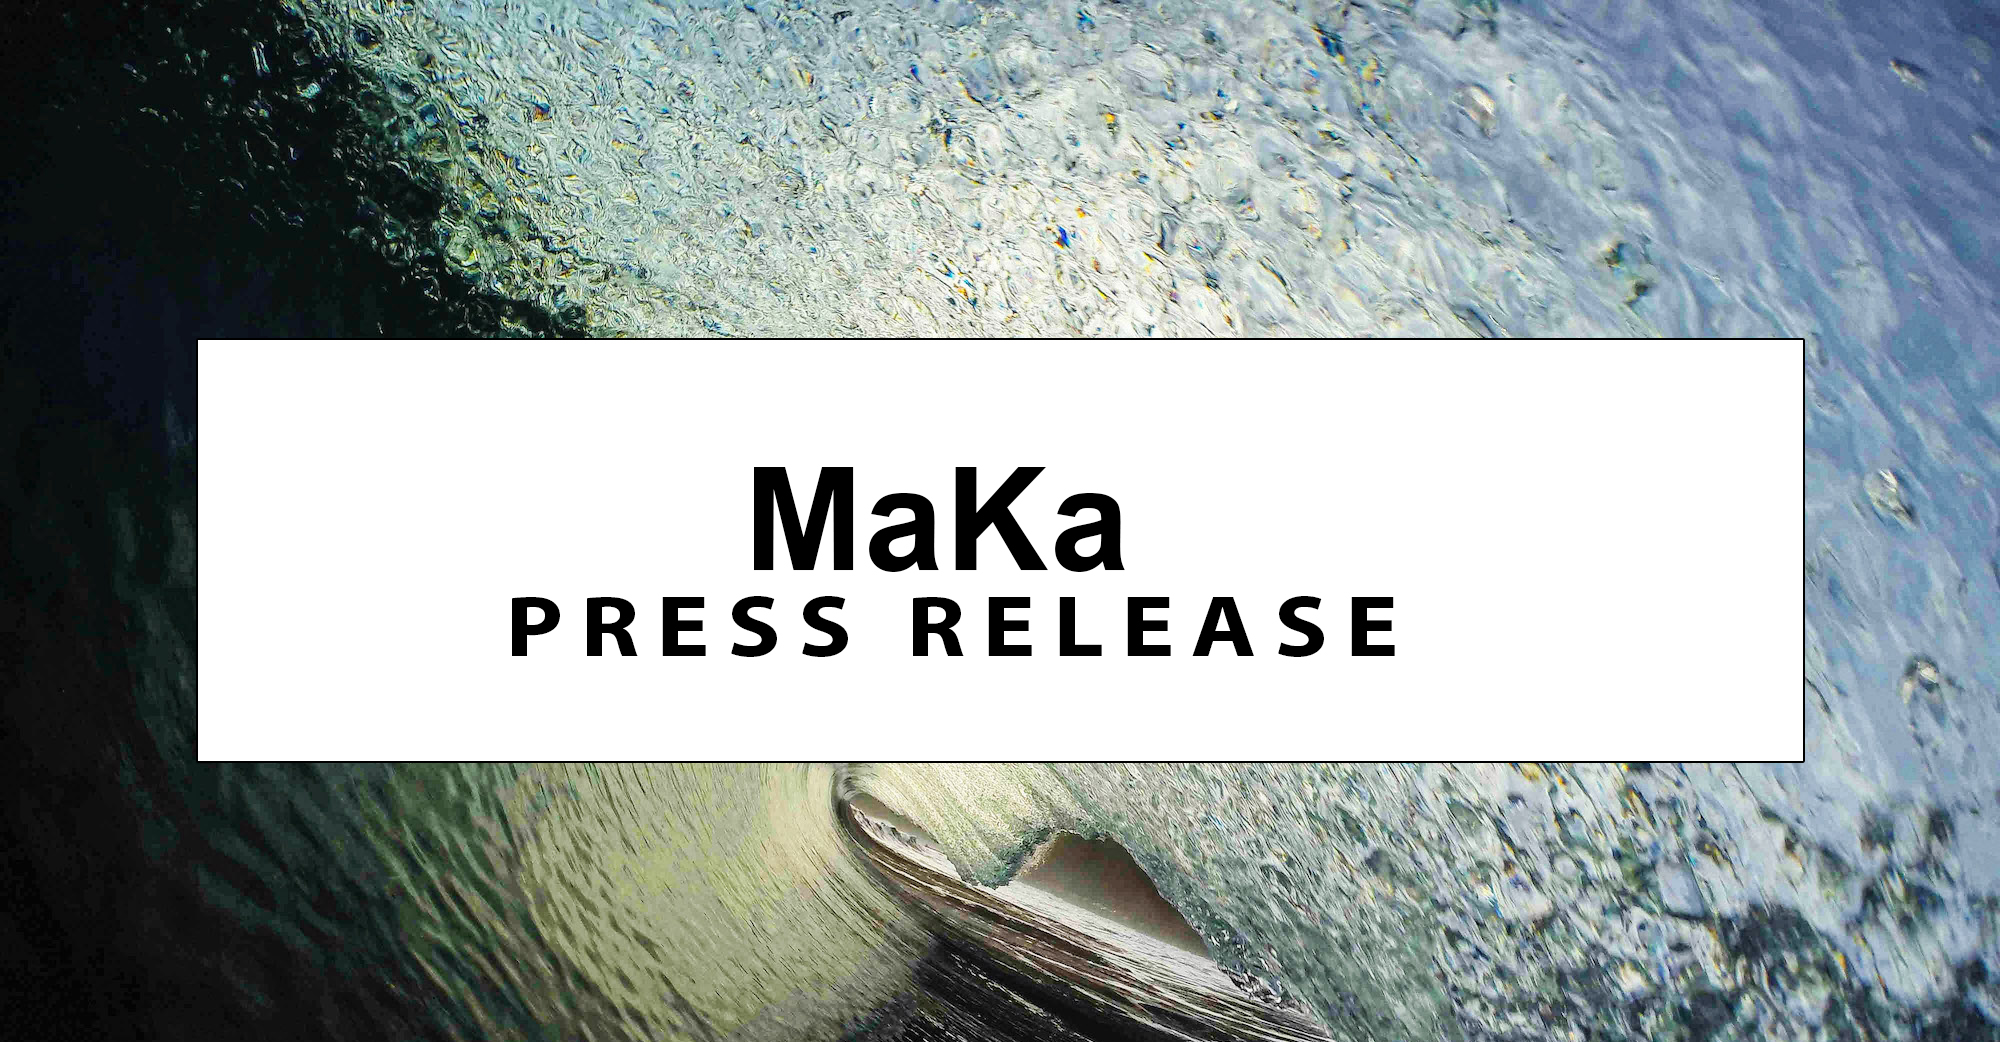 Press Release – Mālama i ke Kai ʻo Waipiʻo seeks to negotiate ocean access. Invites support.